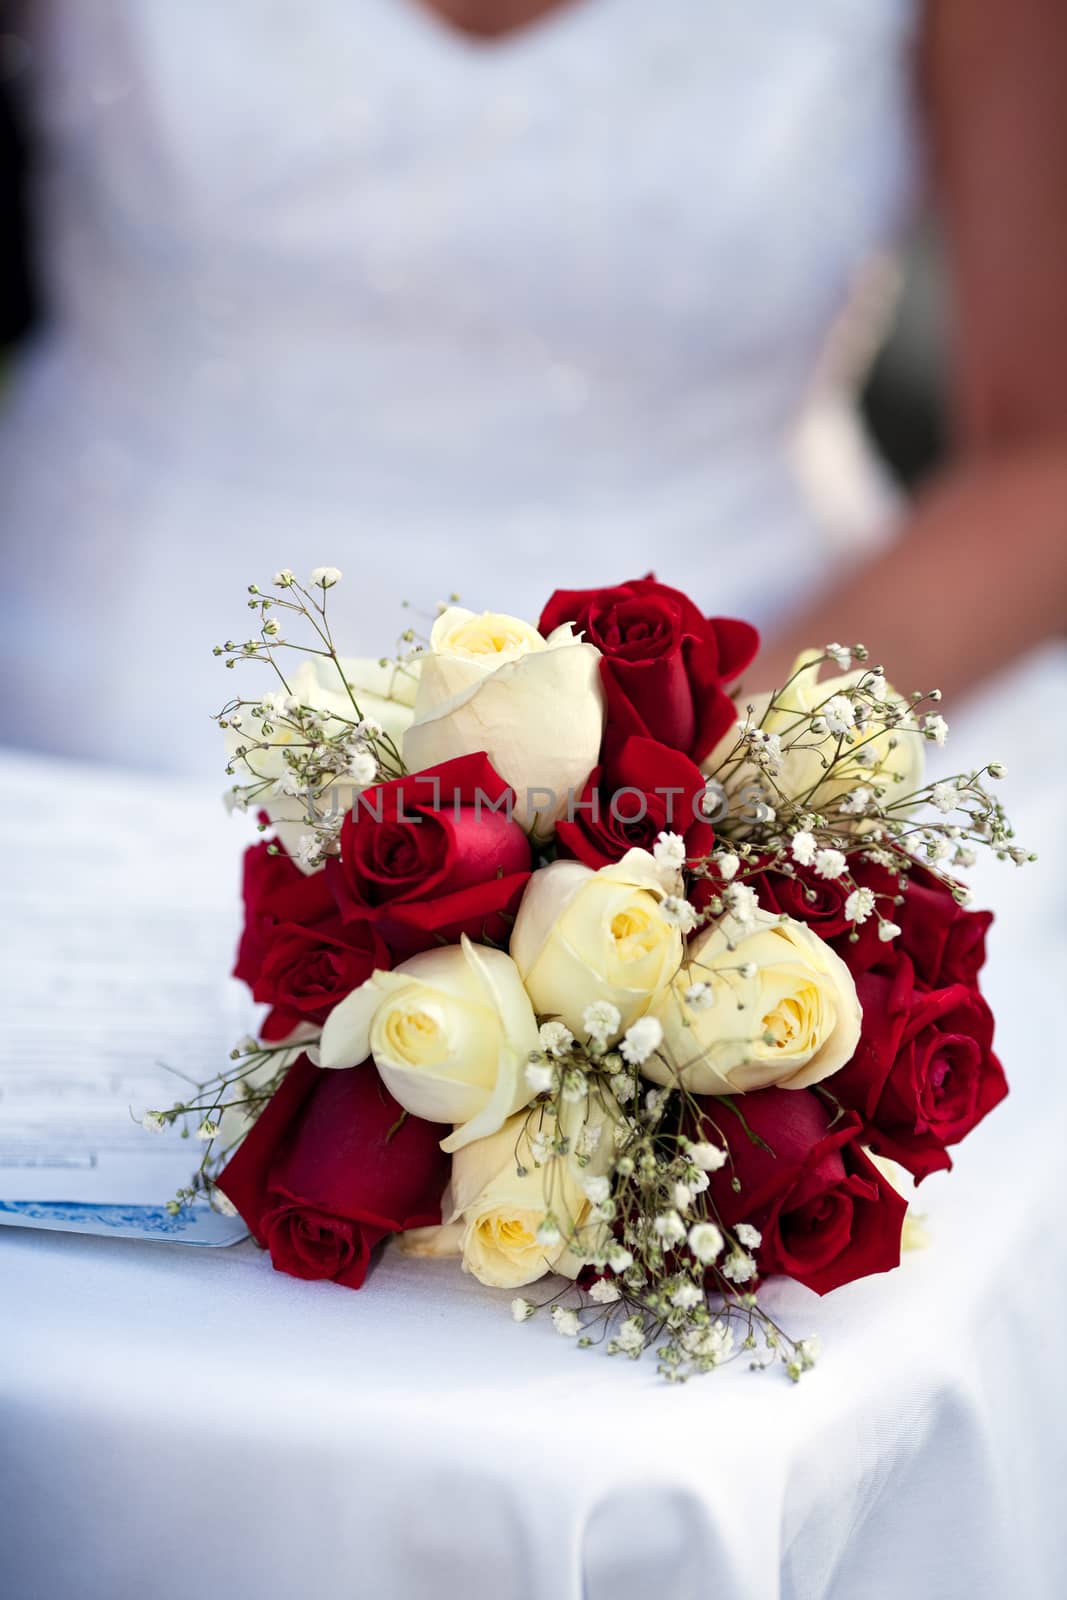 Rose Wedding Bouquet by songbird839